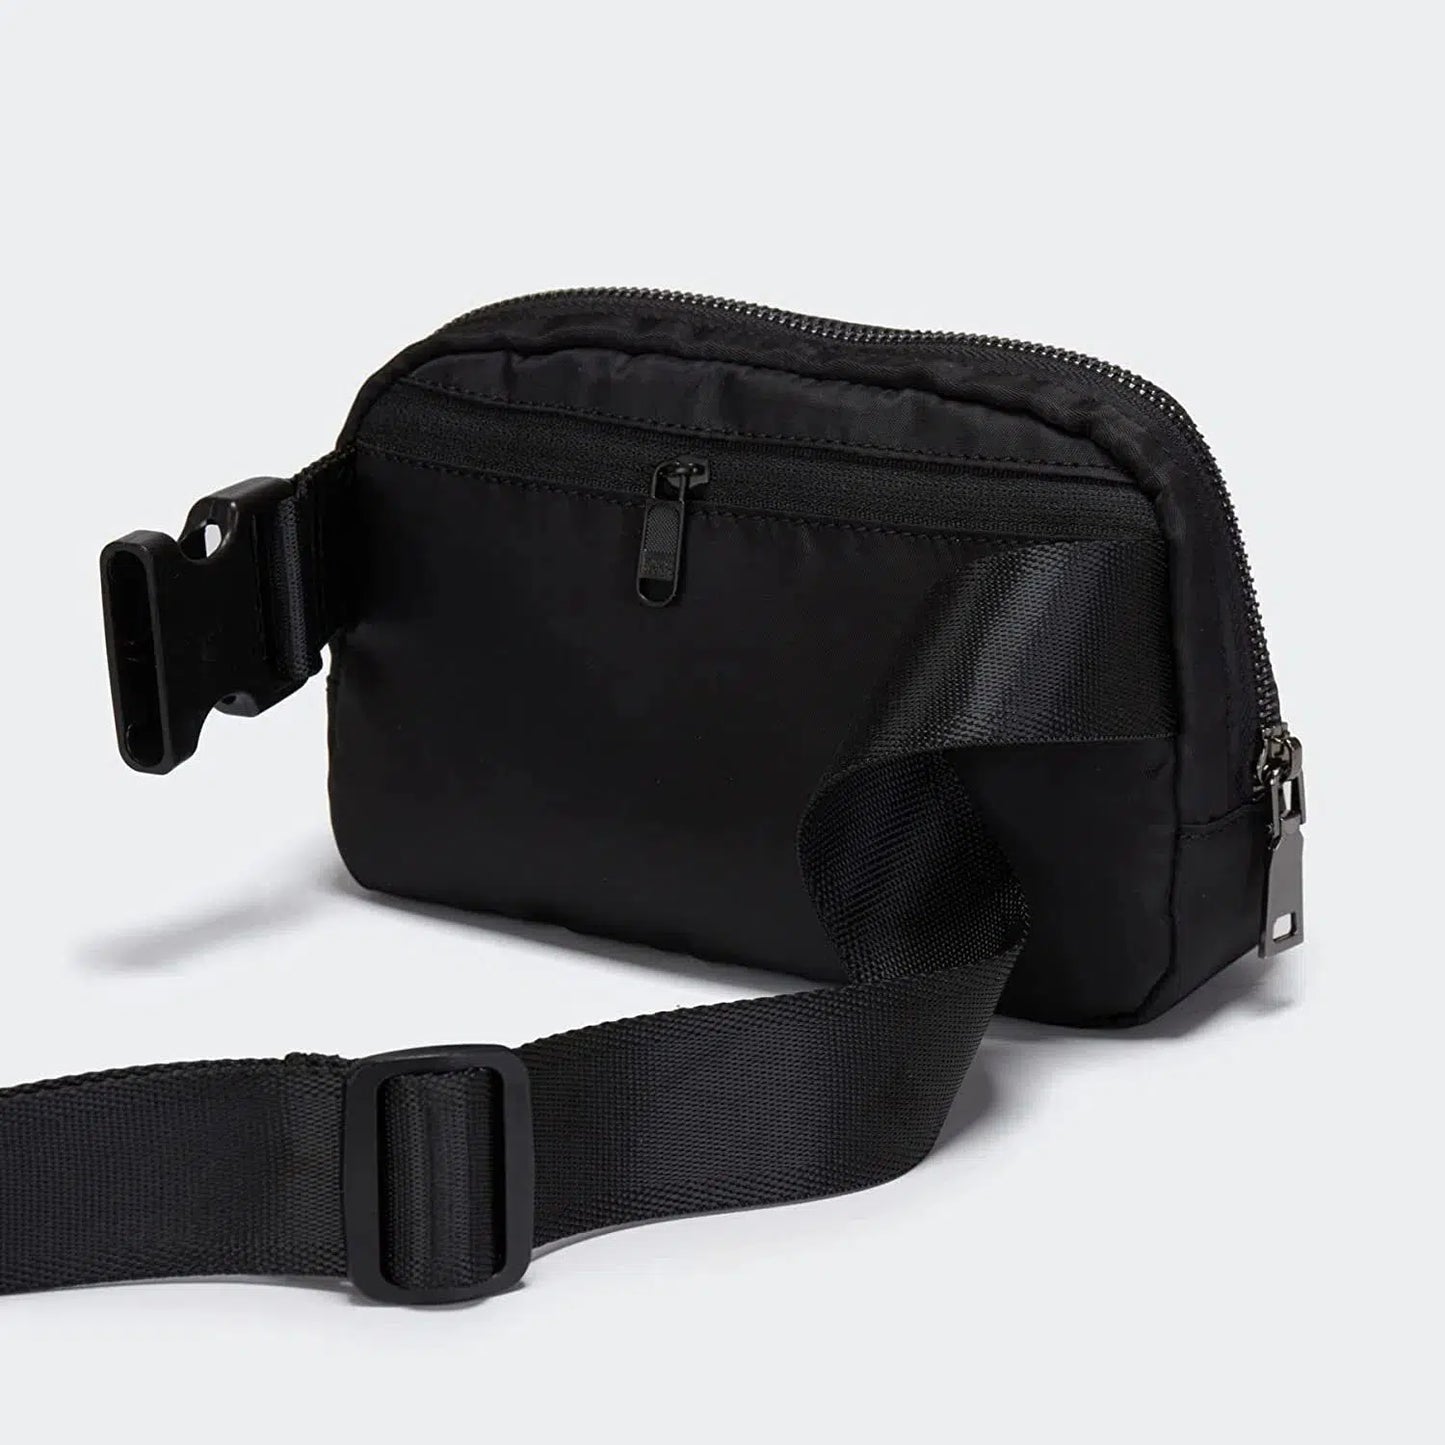 Hap Tim Belt Bag, Polyester Fanny Pack Bum Bag Crossbody Bags for Women Men (Black)